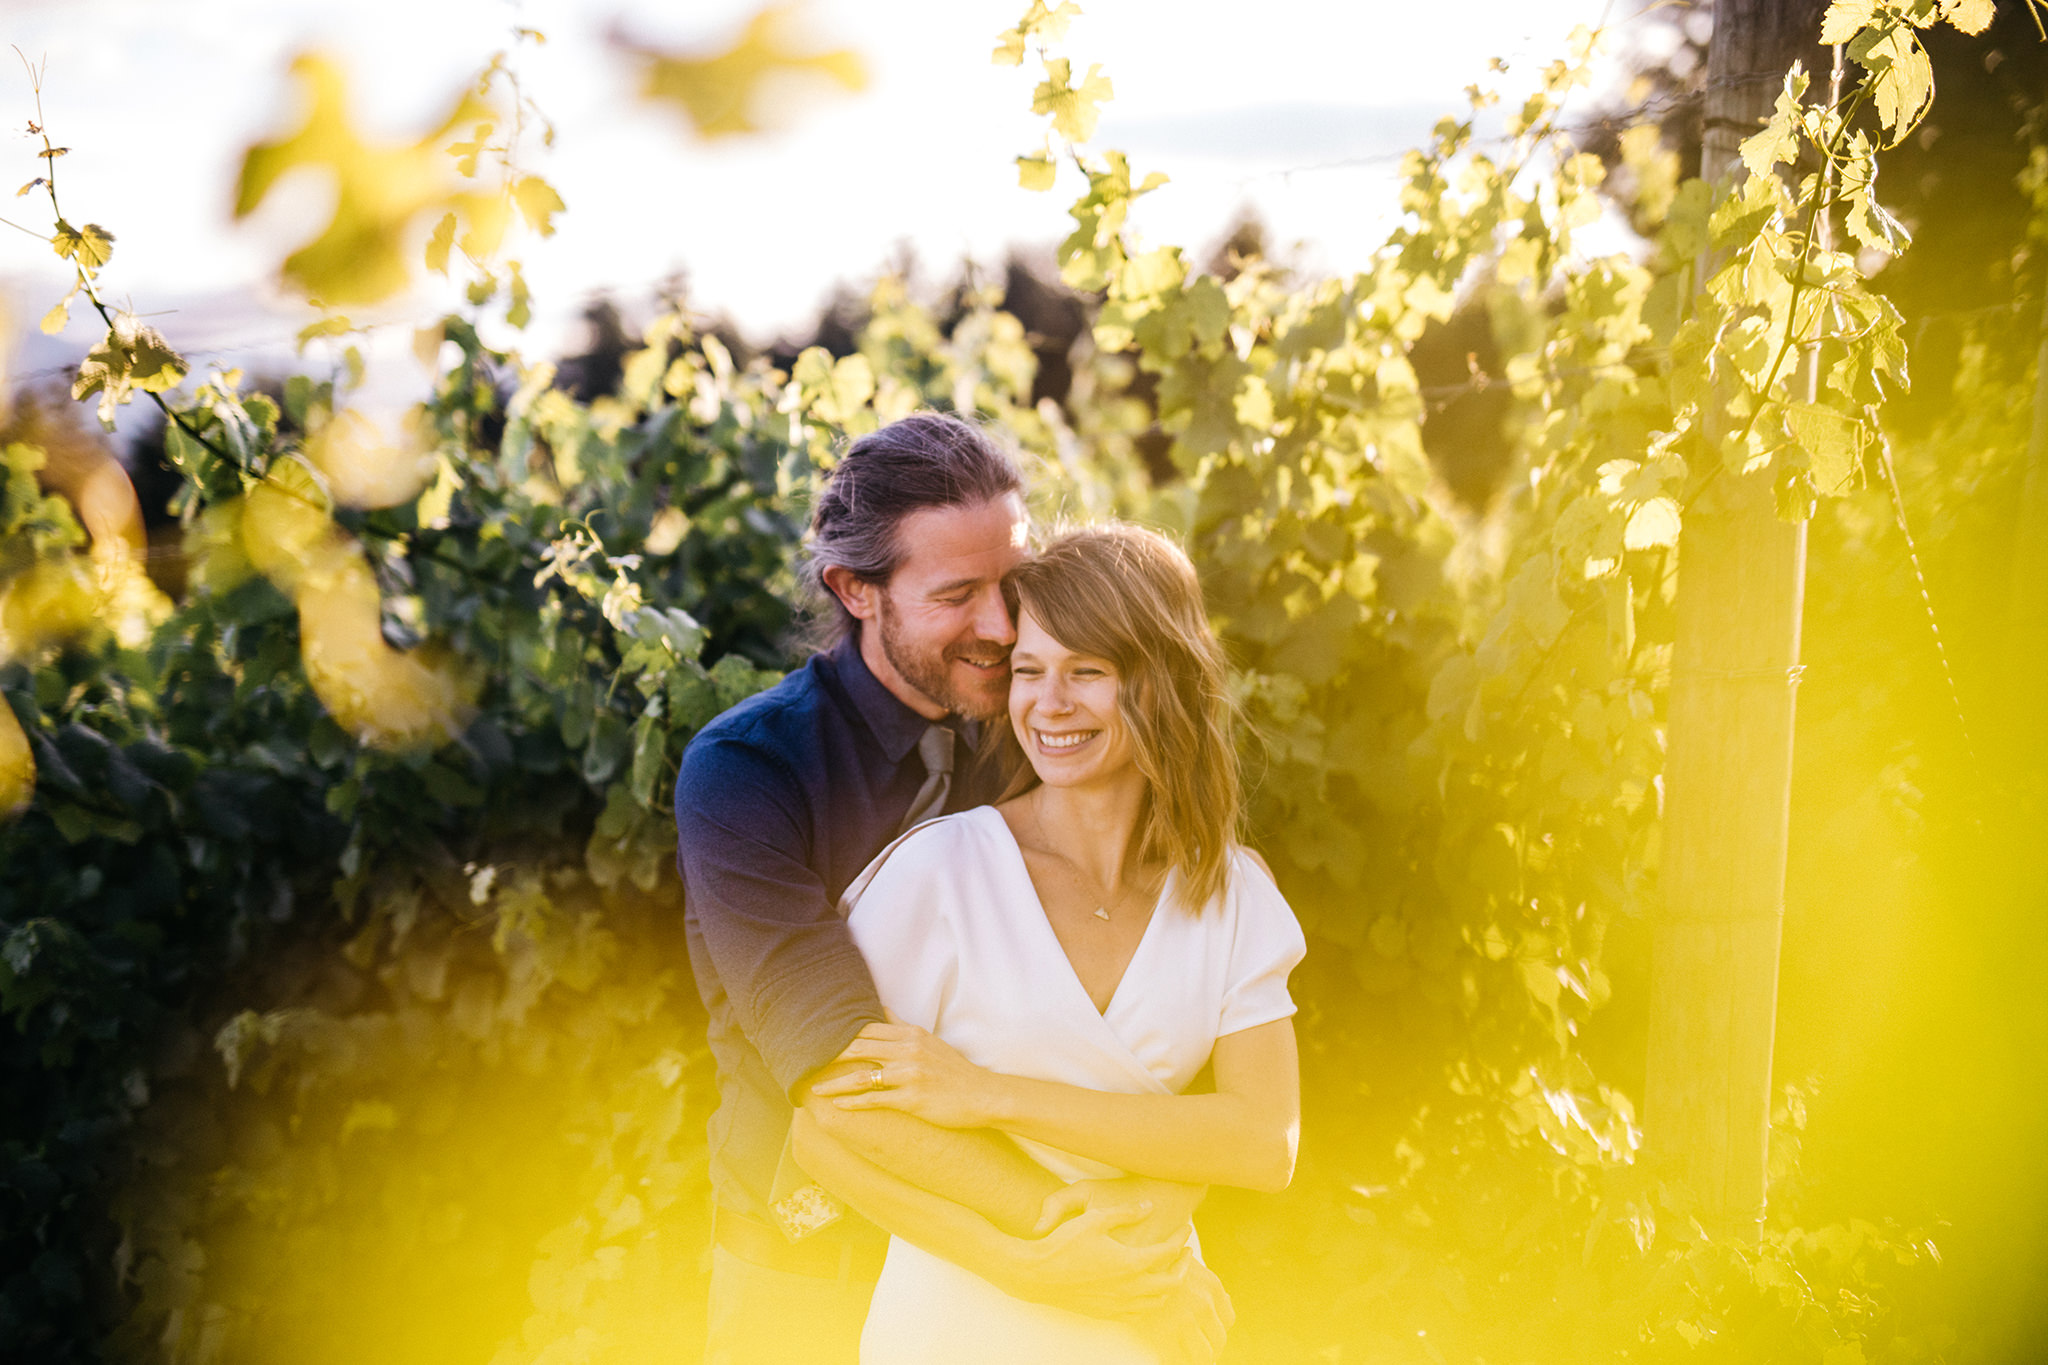 Wedding photo in the vineyard at Gorge Crest Vineyards